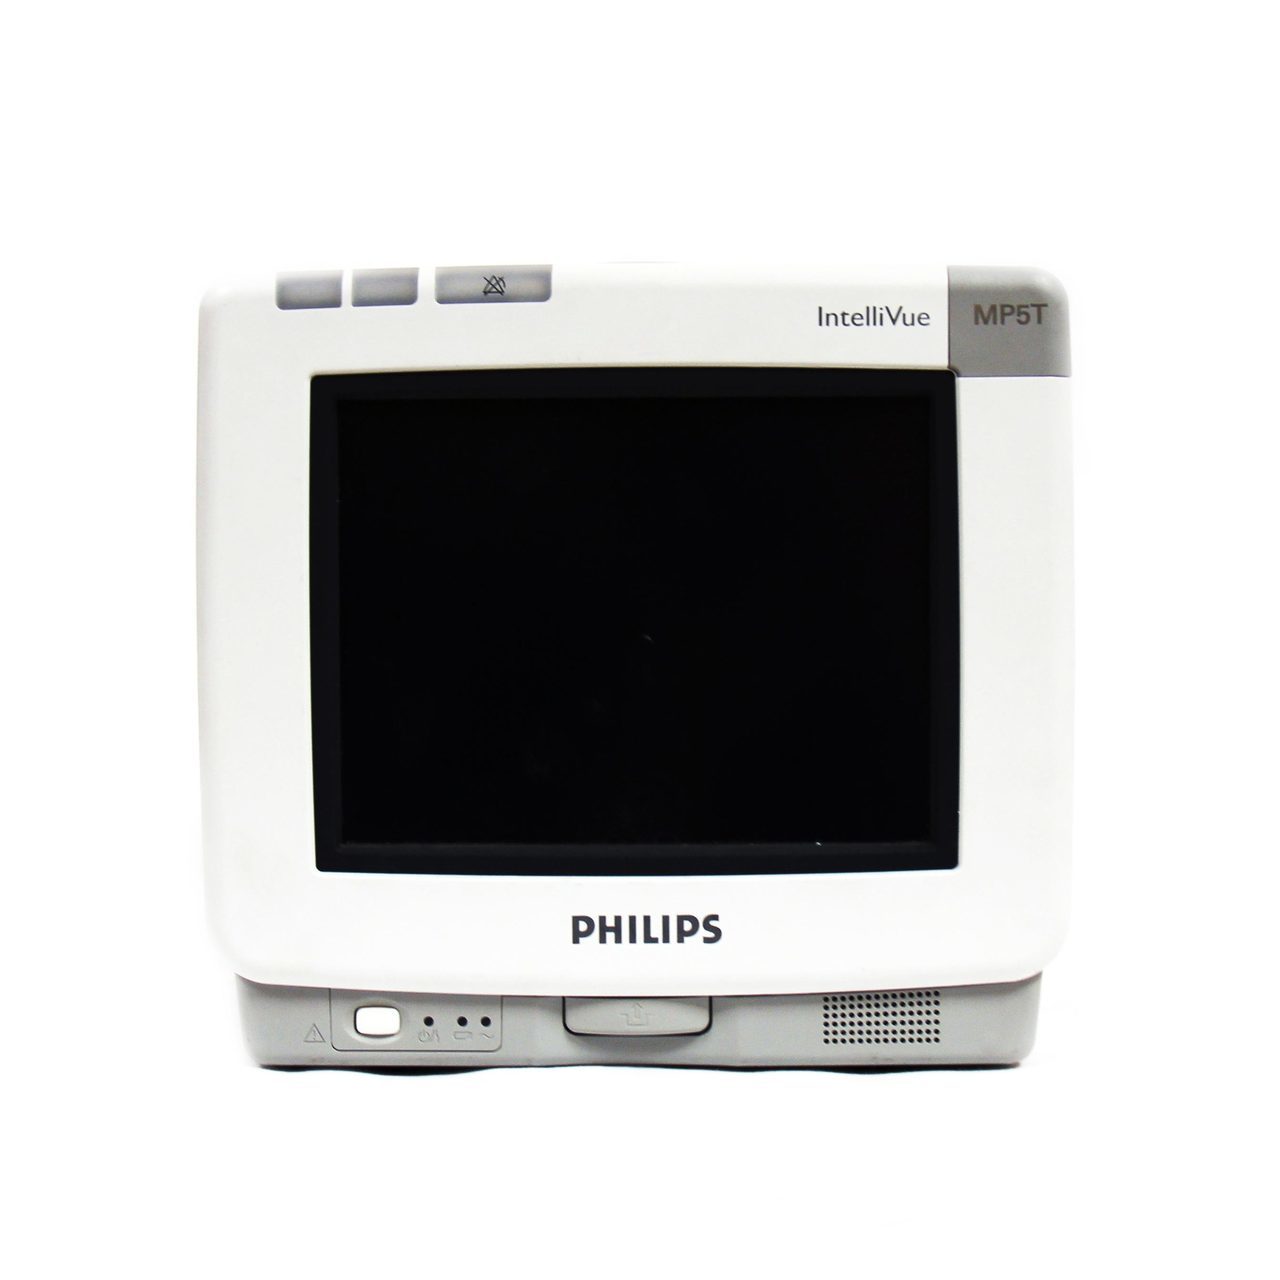 Monitor Philips Intellivue  MP5T